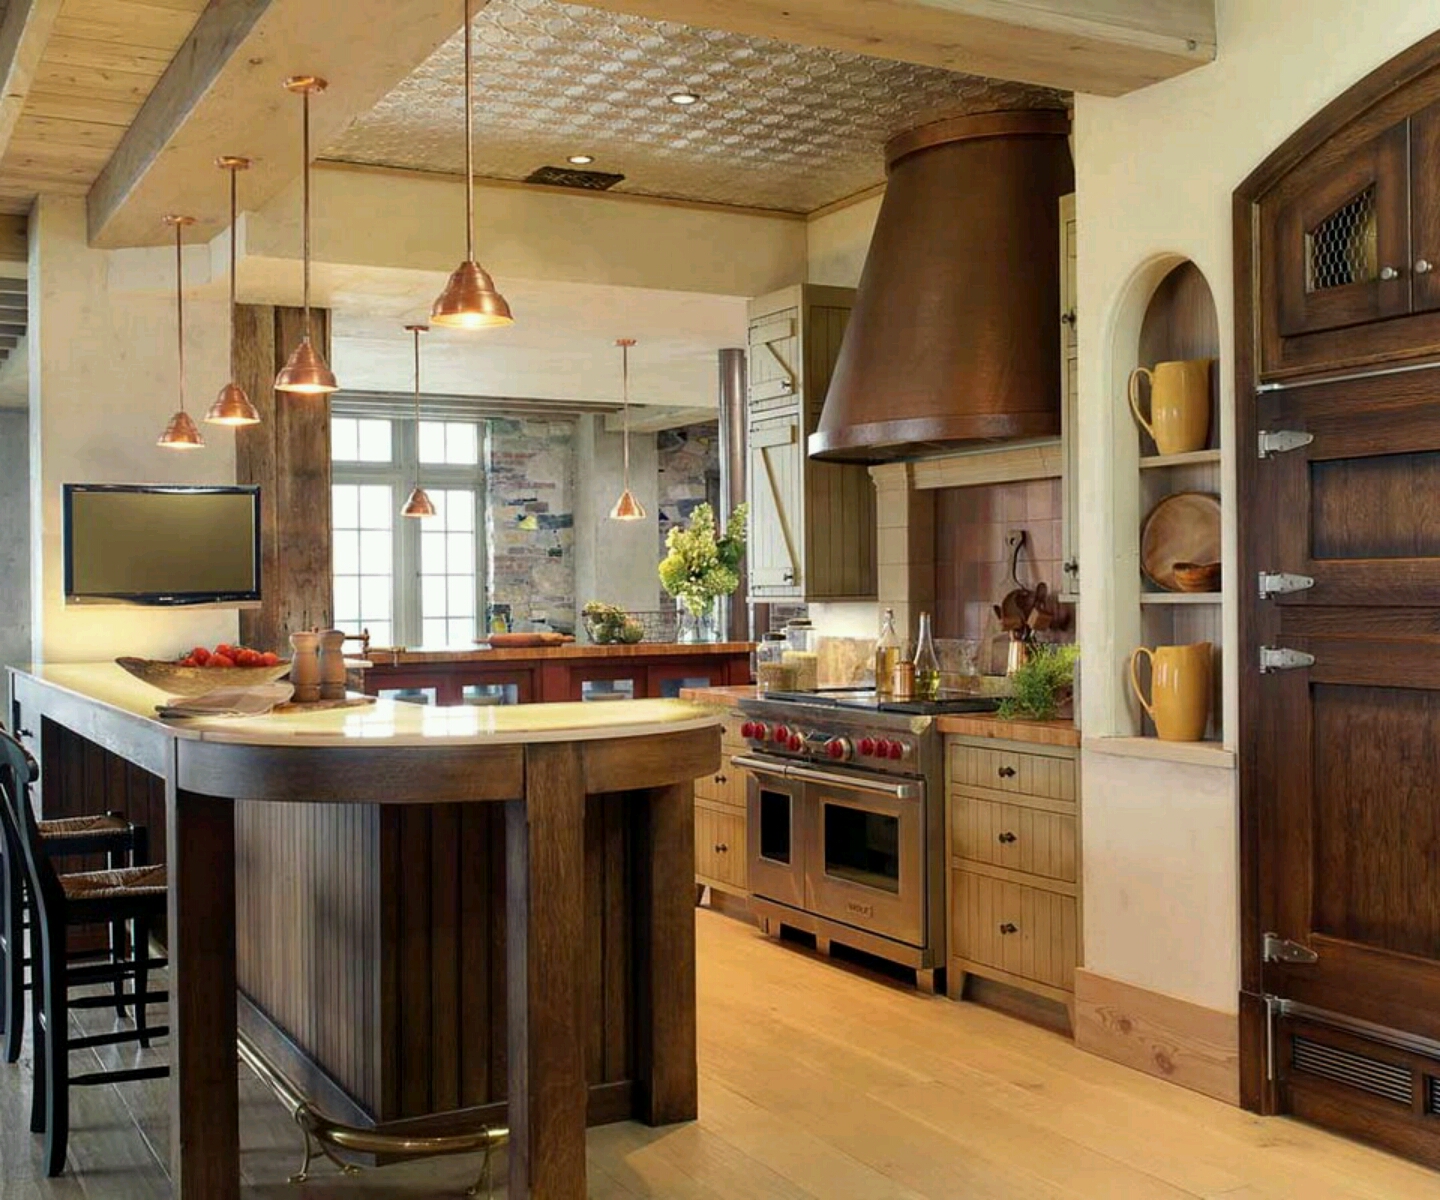 New home designs latest.: Modern home kitchen cabinet designs ideas.